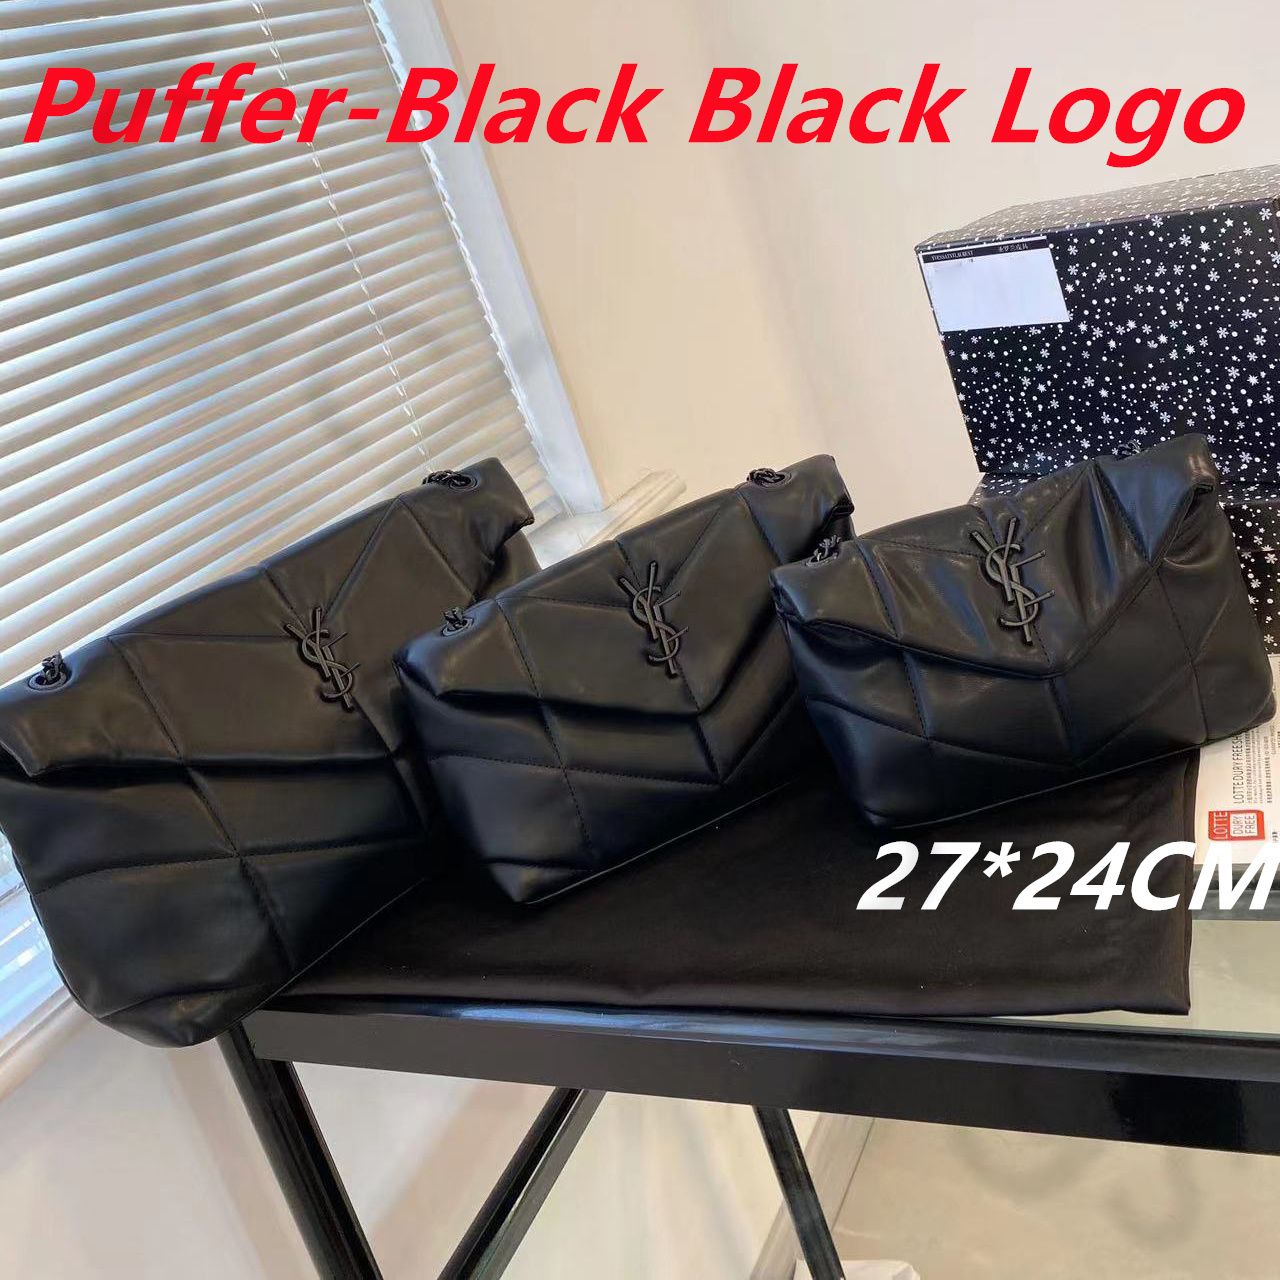 Puffer-Black Black s